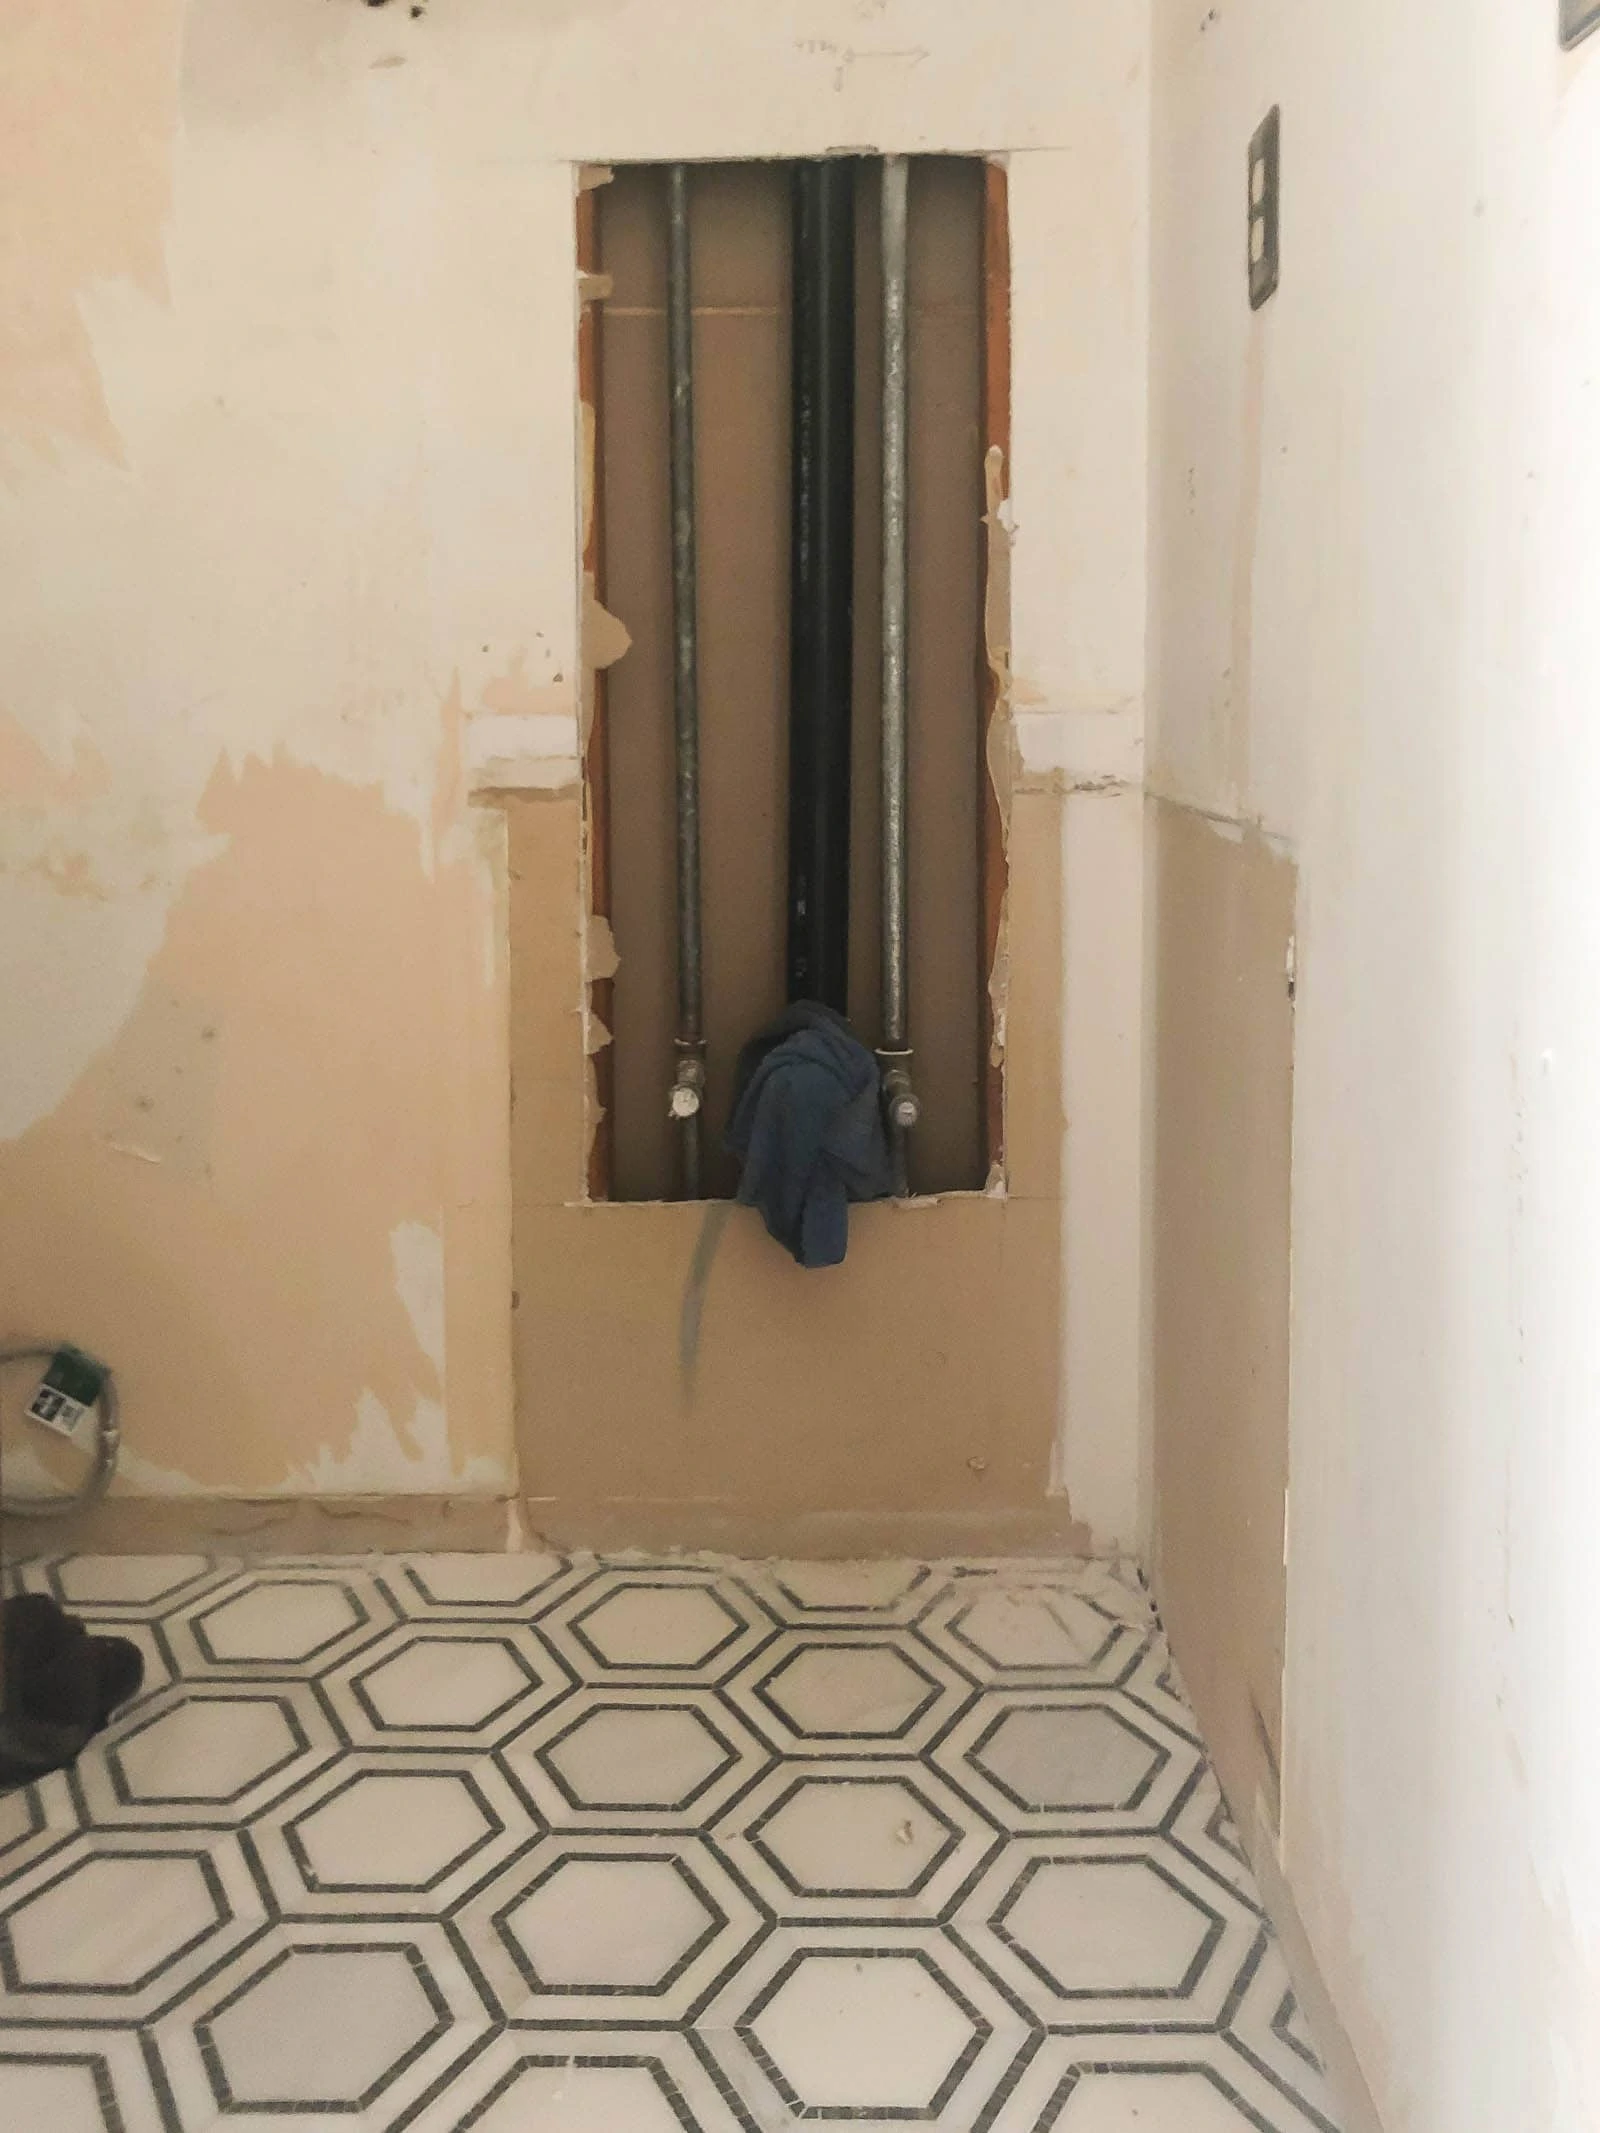 Drywall cutout in bathroom showing plumbing lines